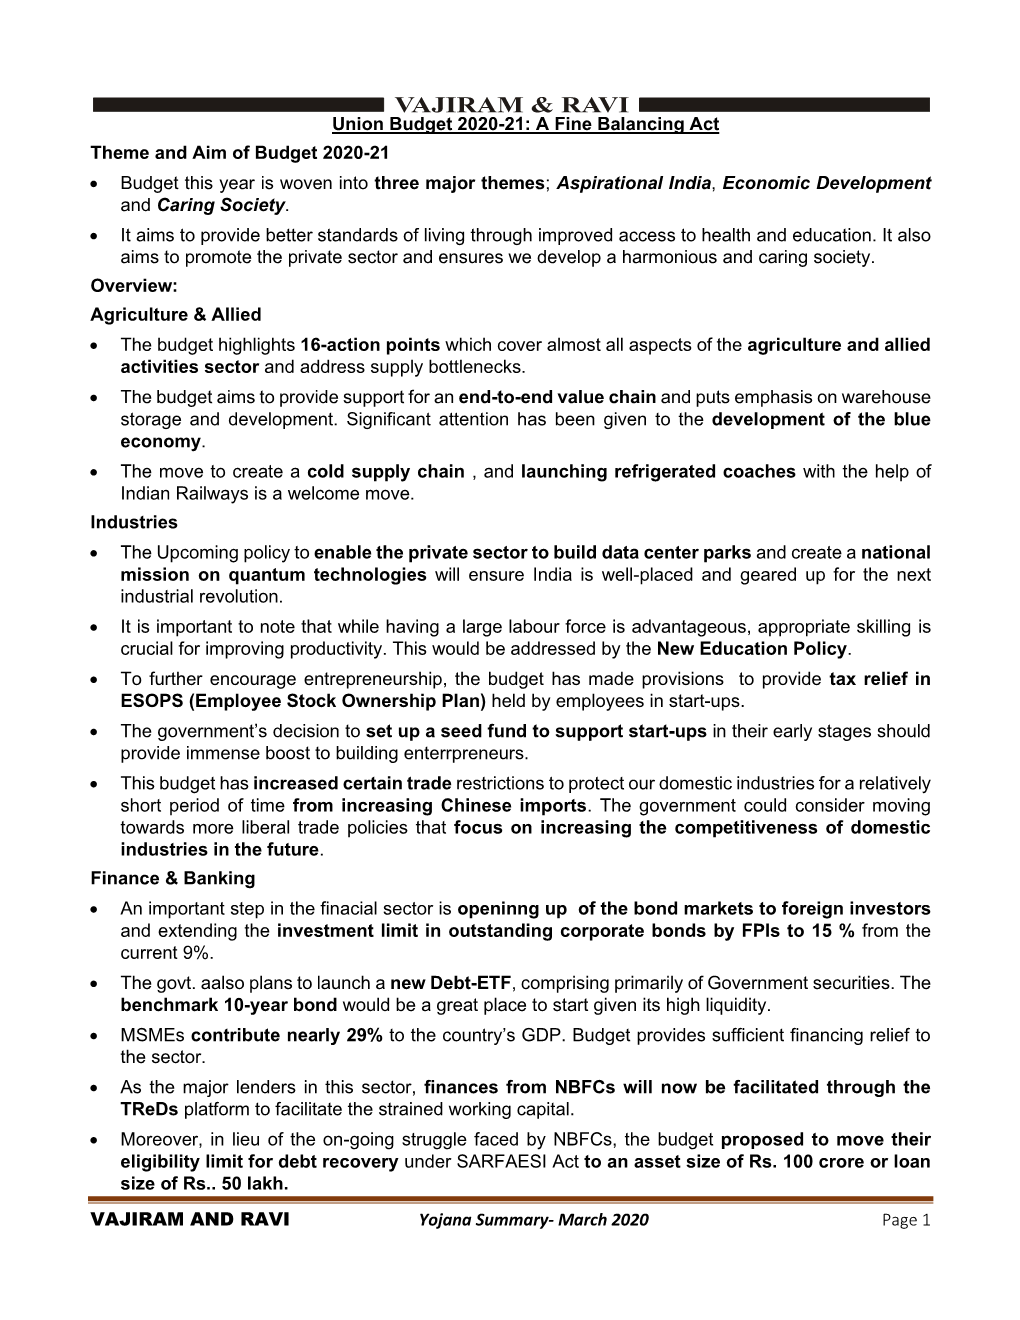 VAJIRAM and RAVI Yojana Summary- March 2020 Page 1 Union Budget 2020-21: a Fine Balancing Act Theme and Aim of Budget 20